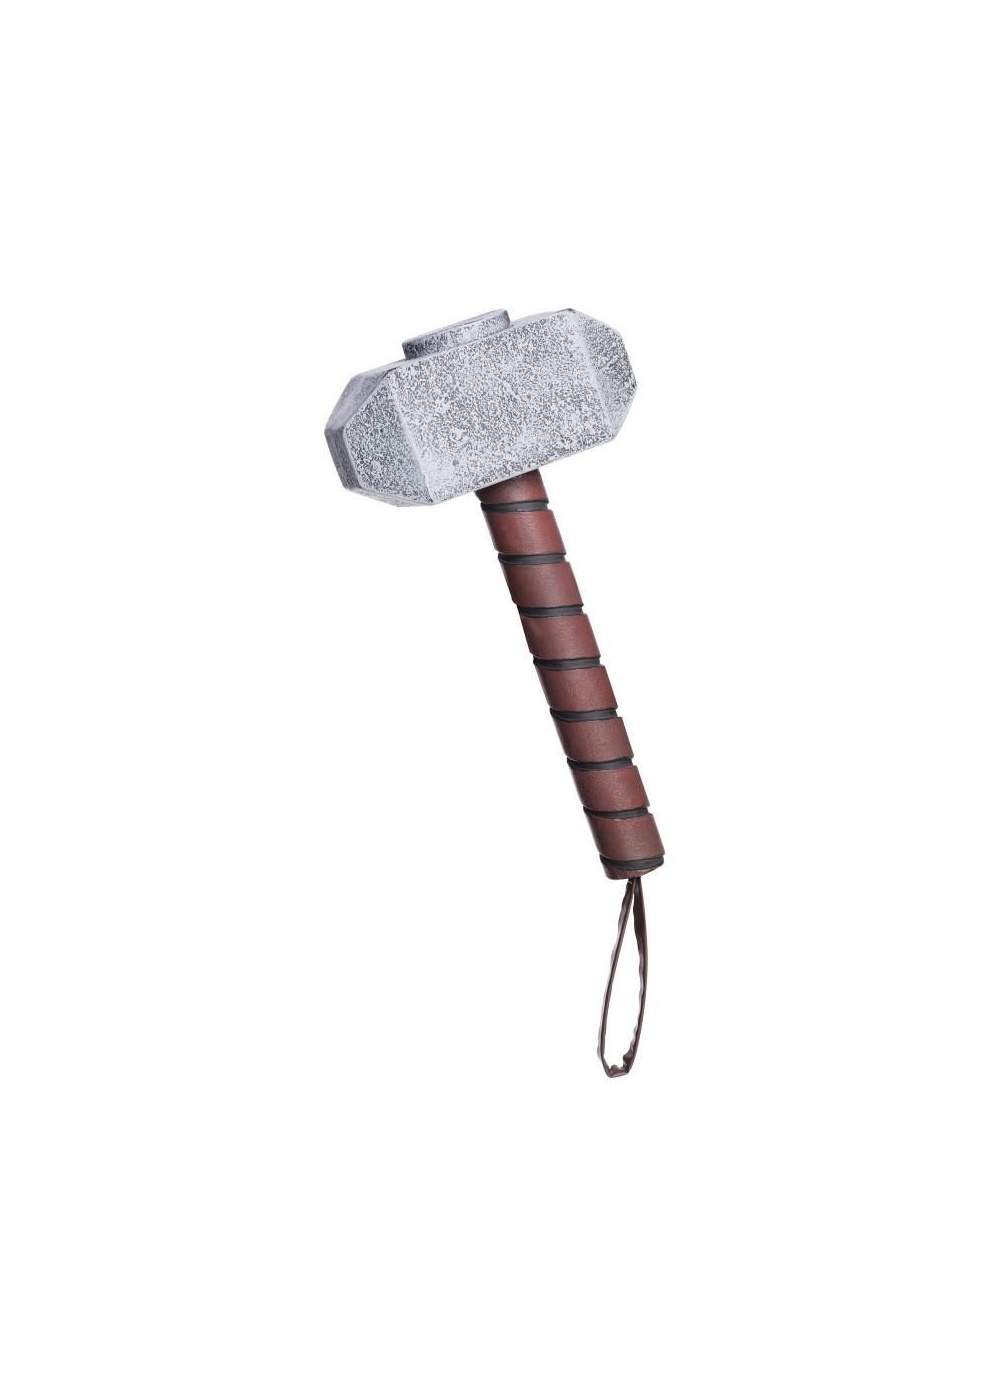  Thor Toy Hammer